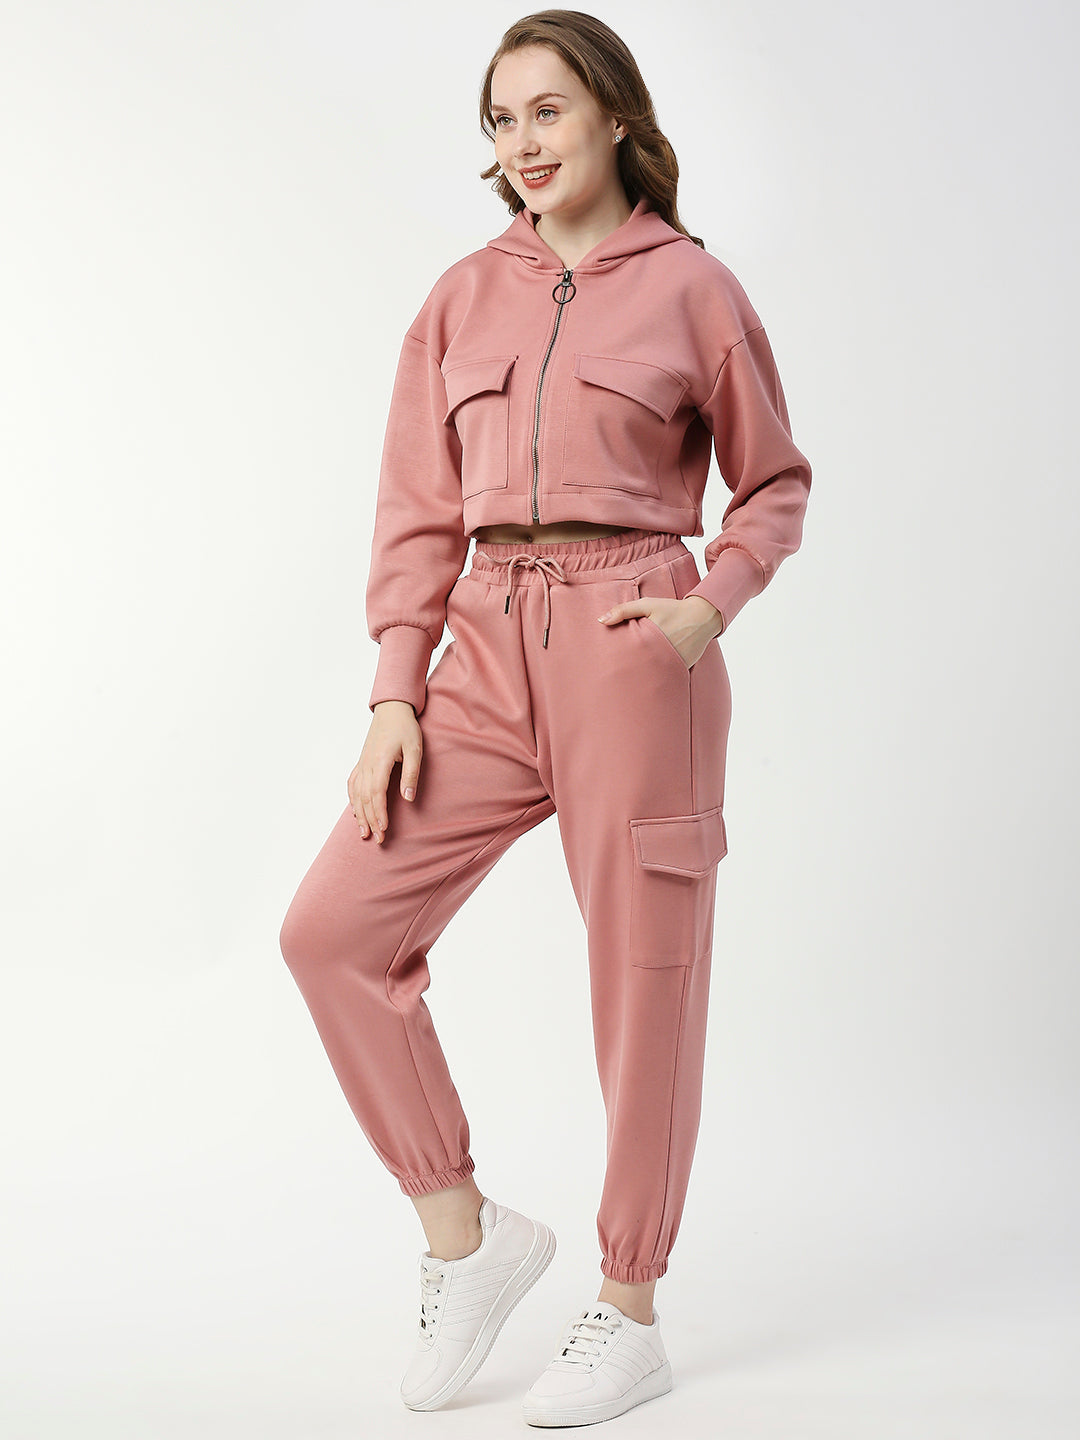 Buy Blamblack Women's Powder Pink Color Co-ordinates Set